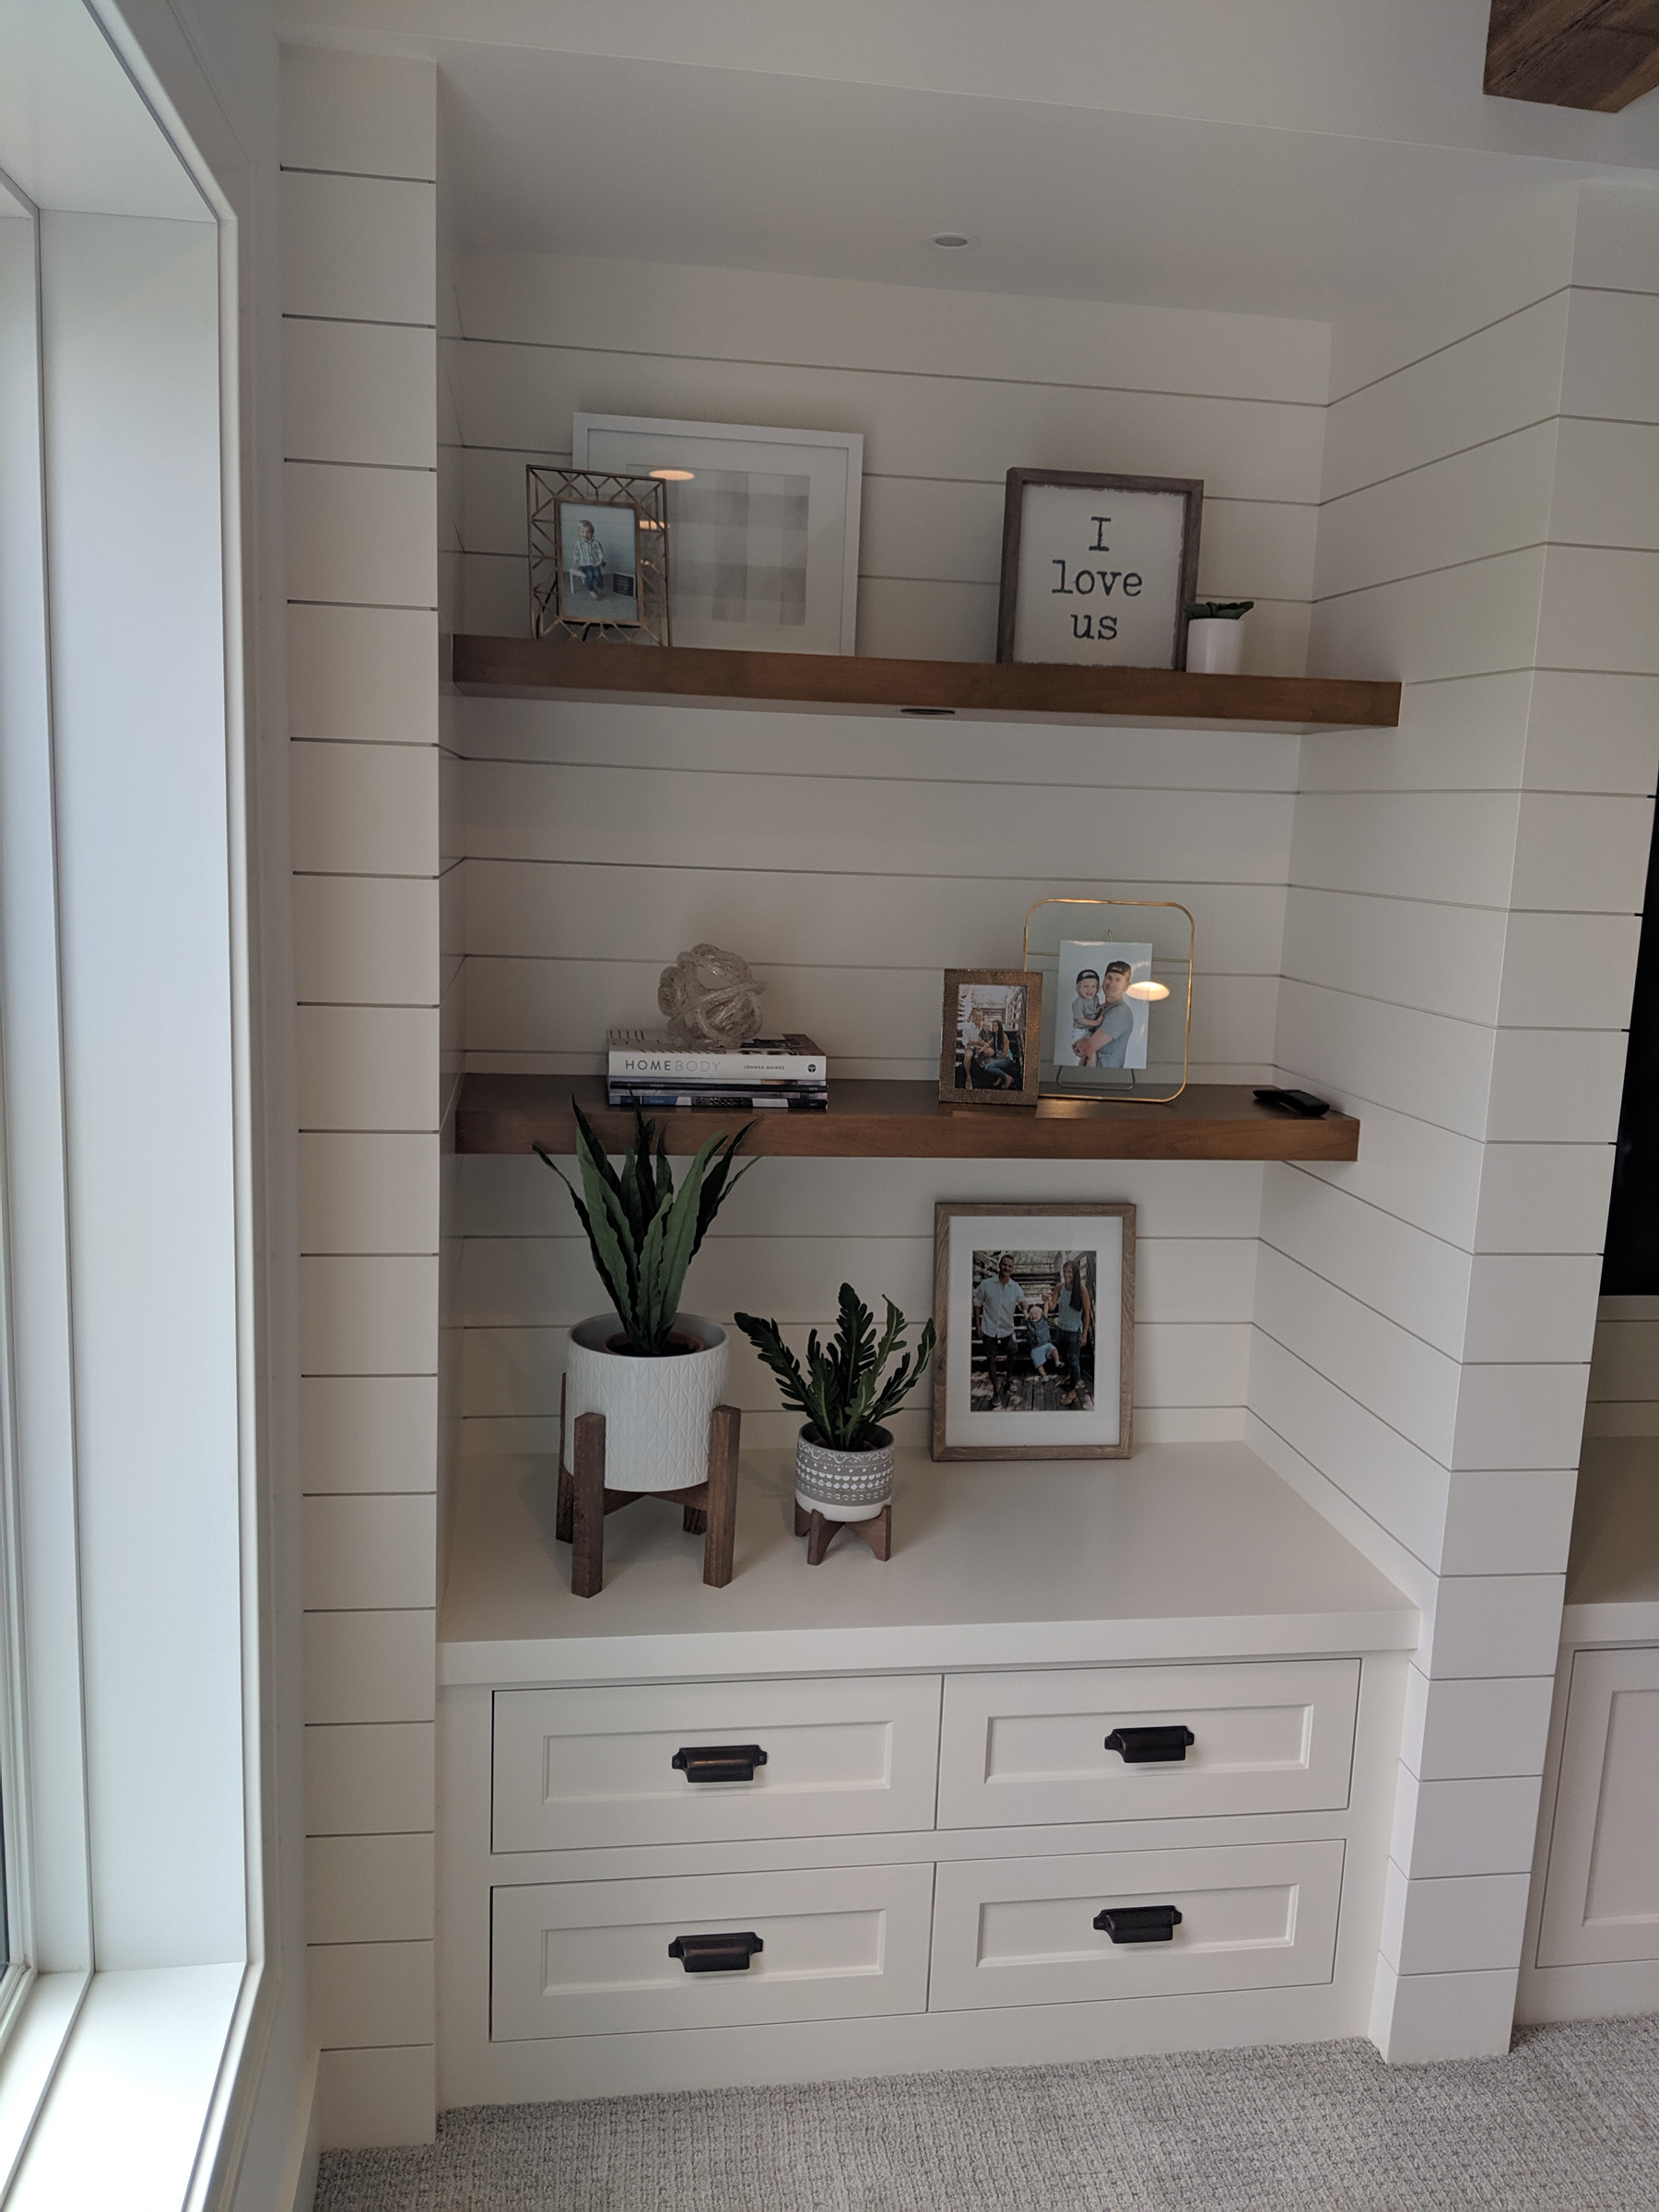 Inset craftsman custom enameled cabinets, floating shelves